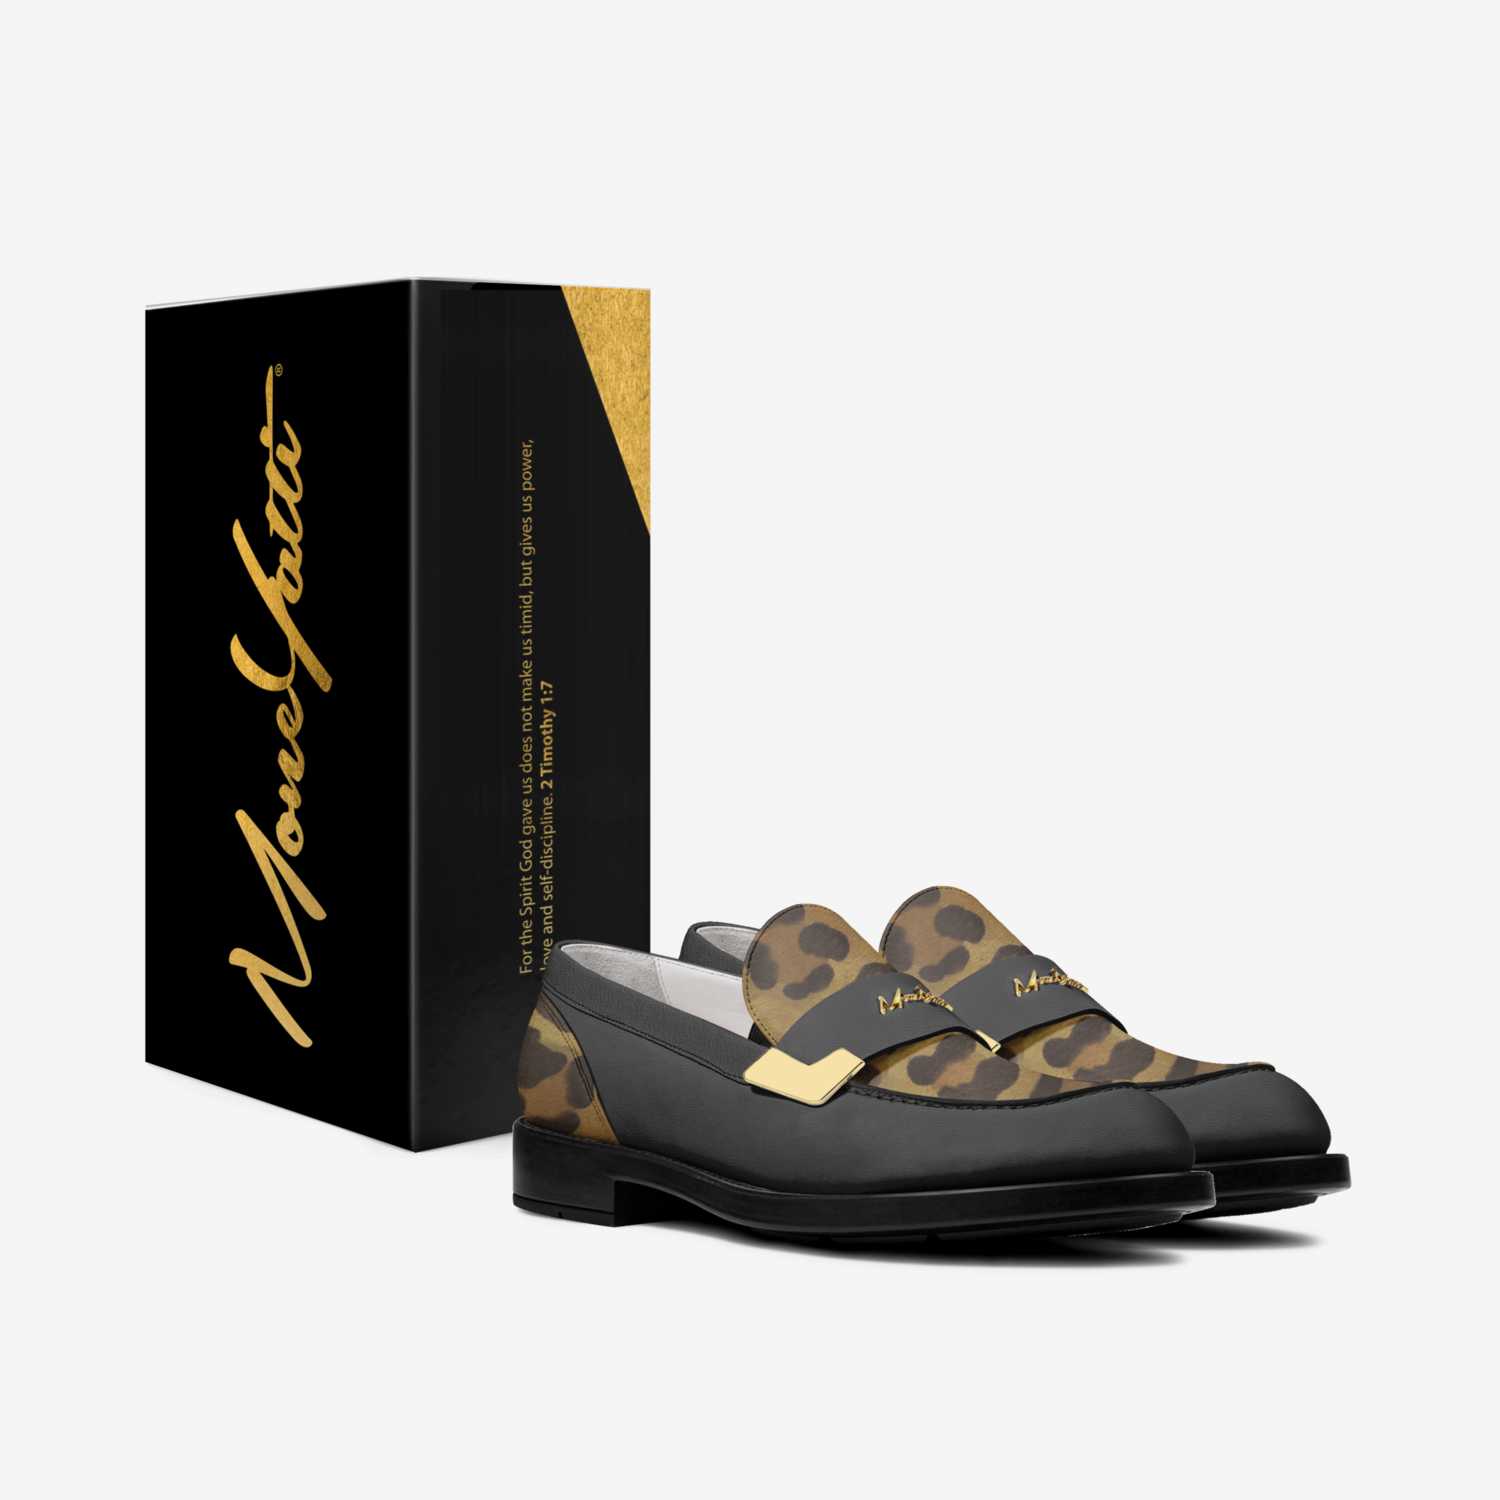 ElegantDrip 010 custom made in Italy shoes by Moneyatti Brand | Box view